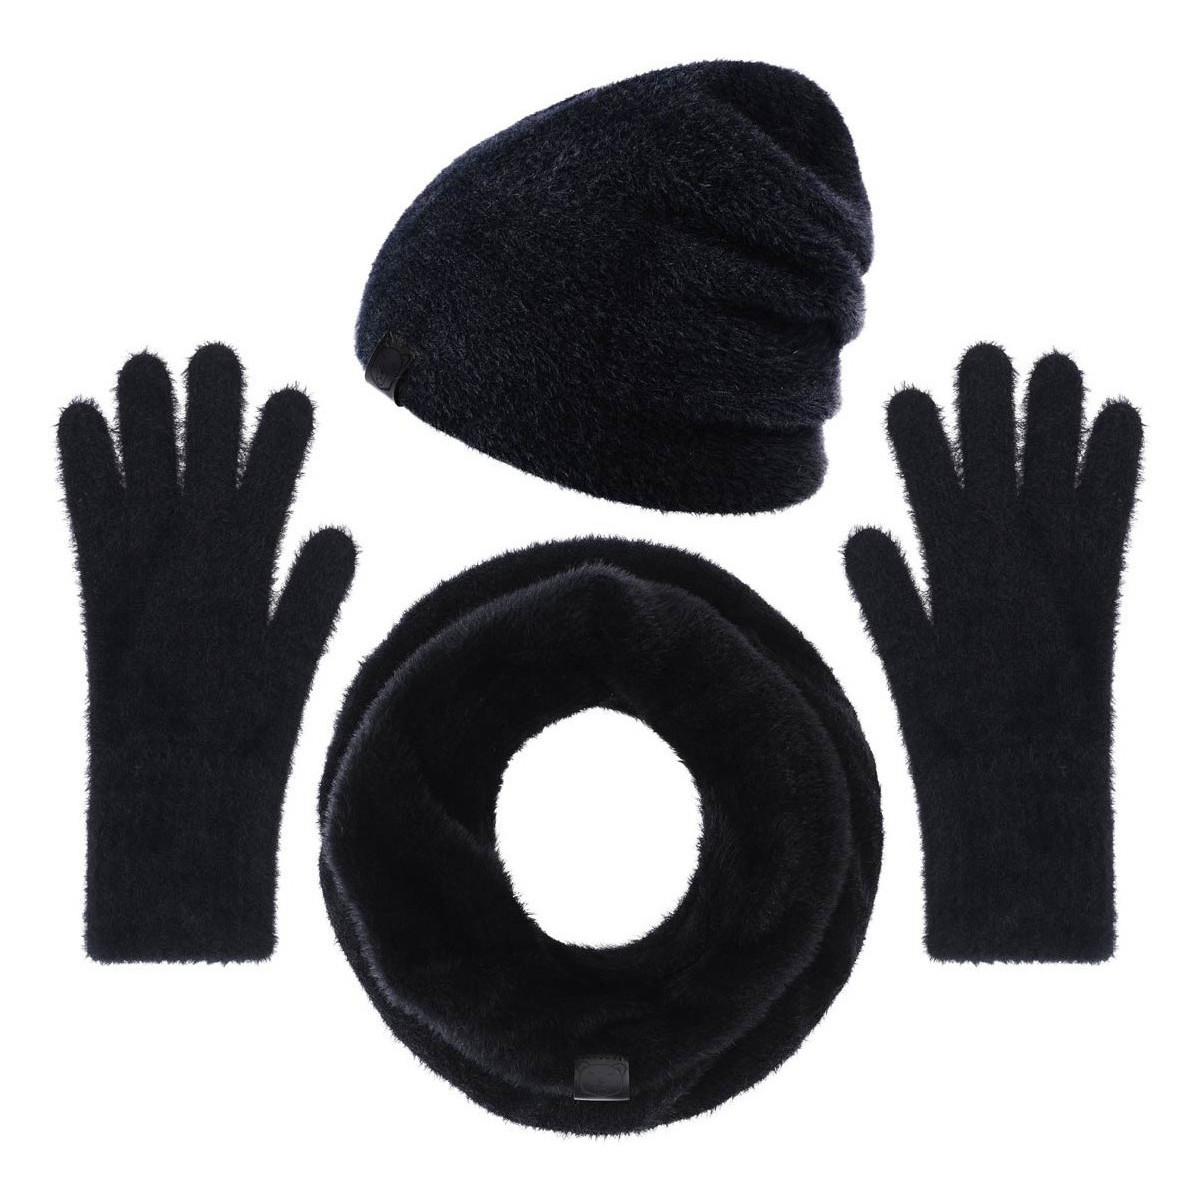 Accessoires textile Femme Echarpes / Etoles / Foulards Mokalunga Ensemble Snood gants bonnet Etama Noir